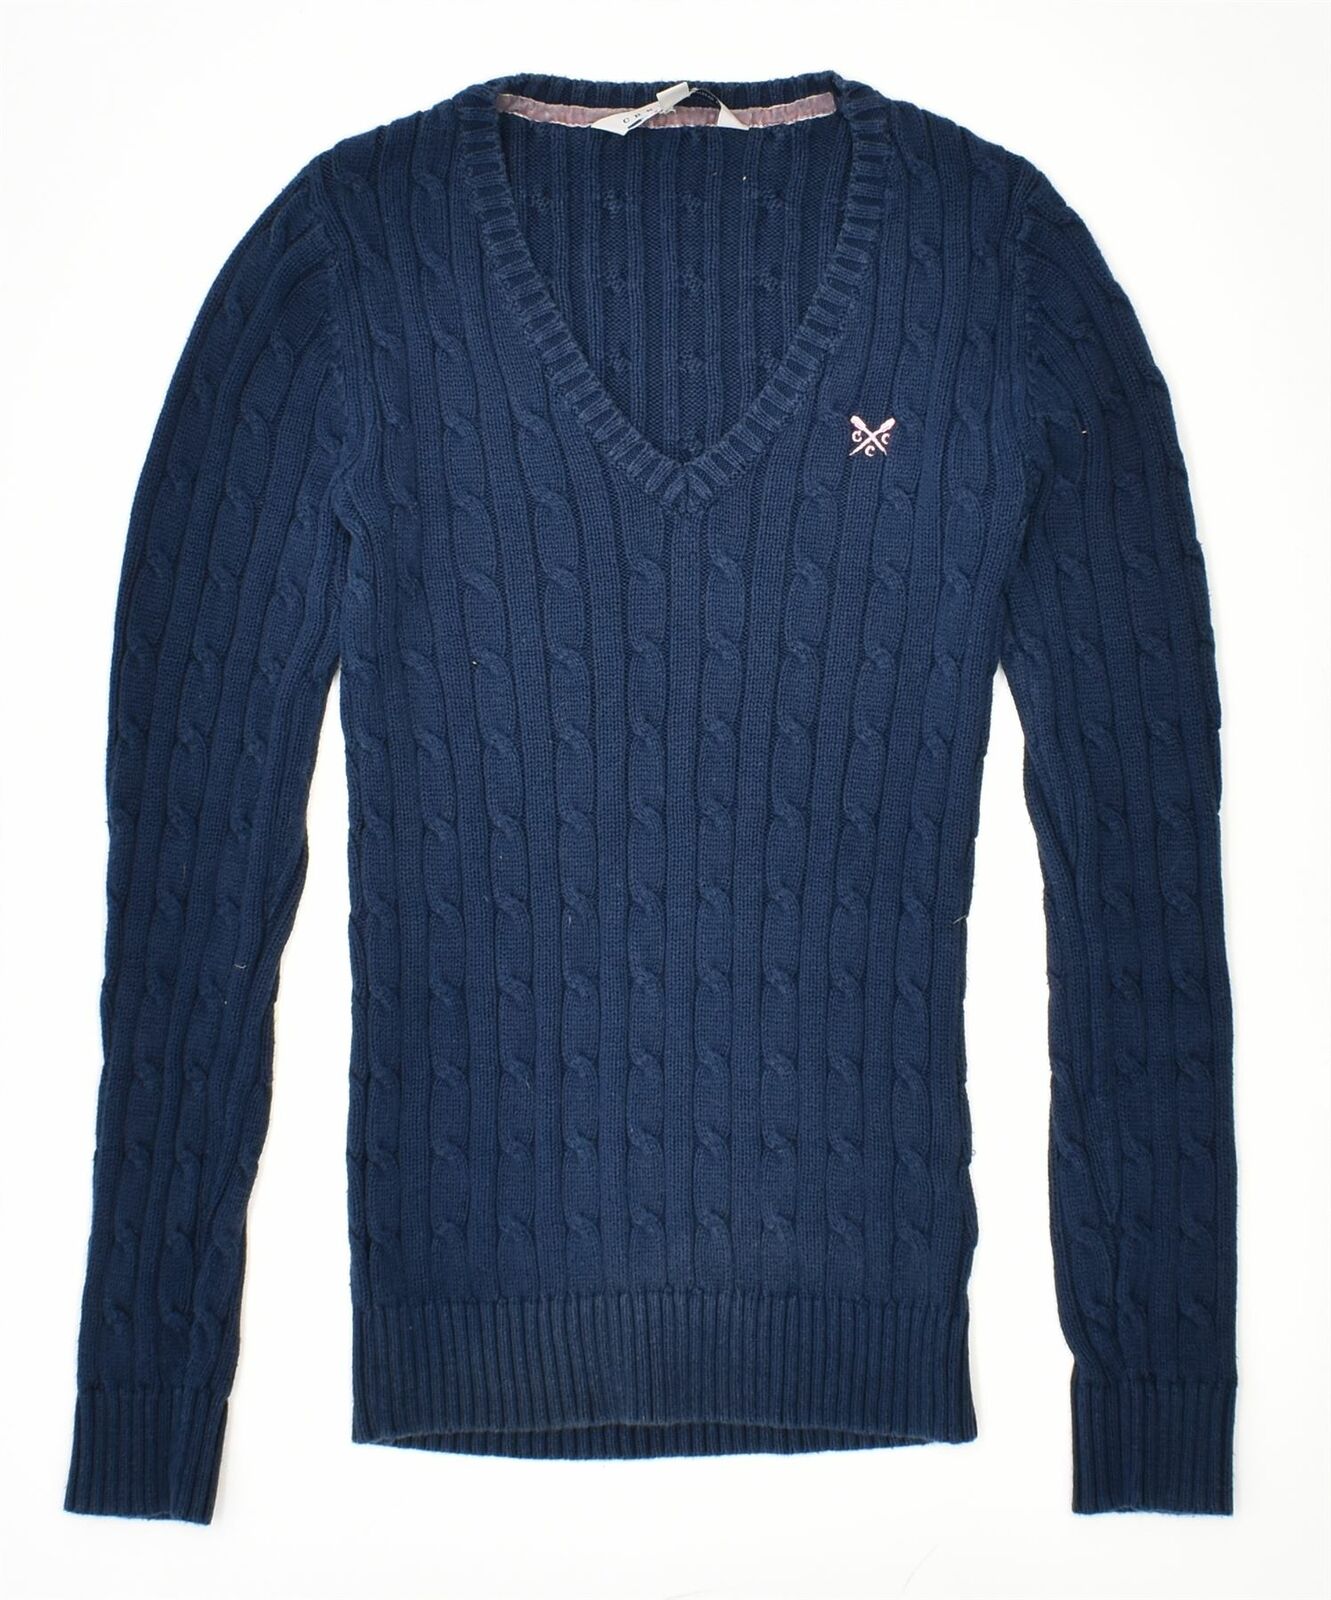 CREW CLOTHING Womens V-Neck Jumper Sweater UK 8 Small Navy Blue Cotton KE02